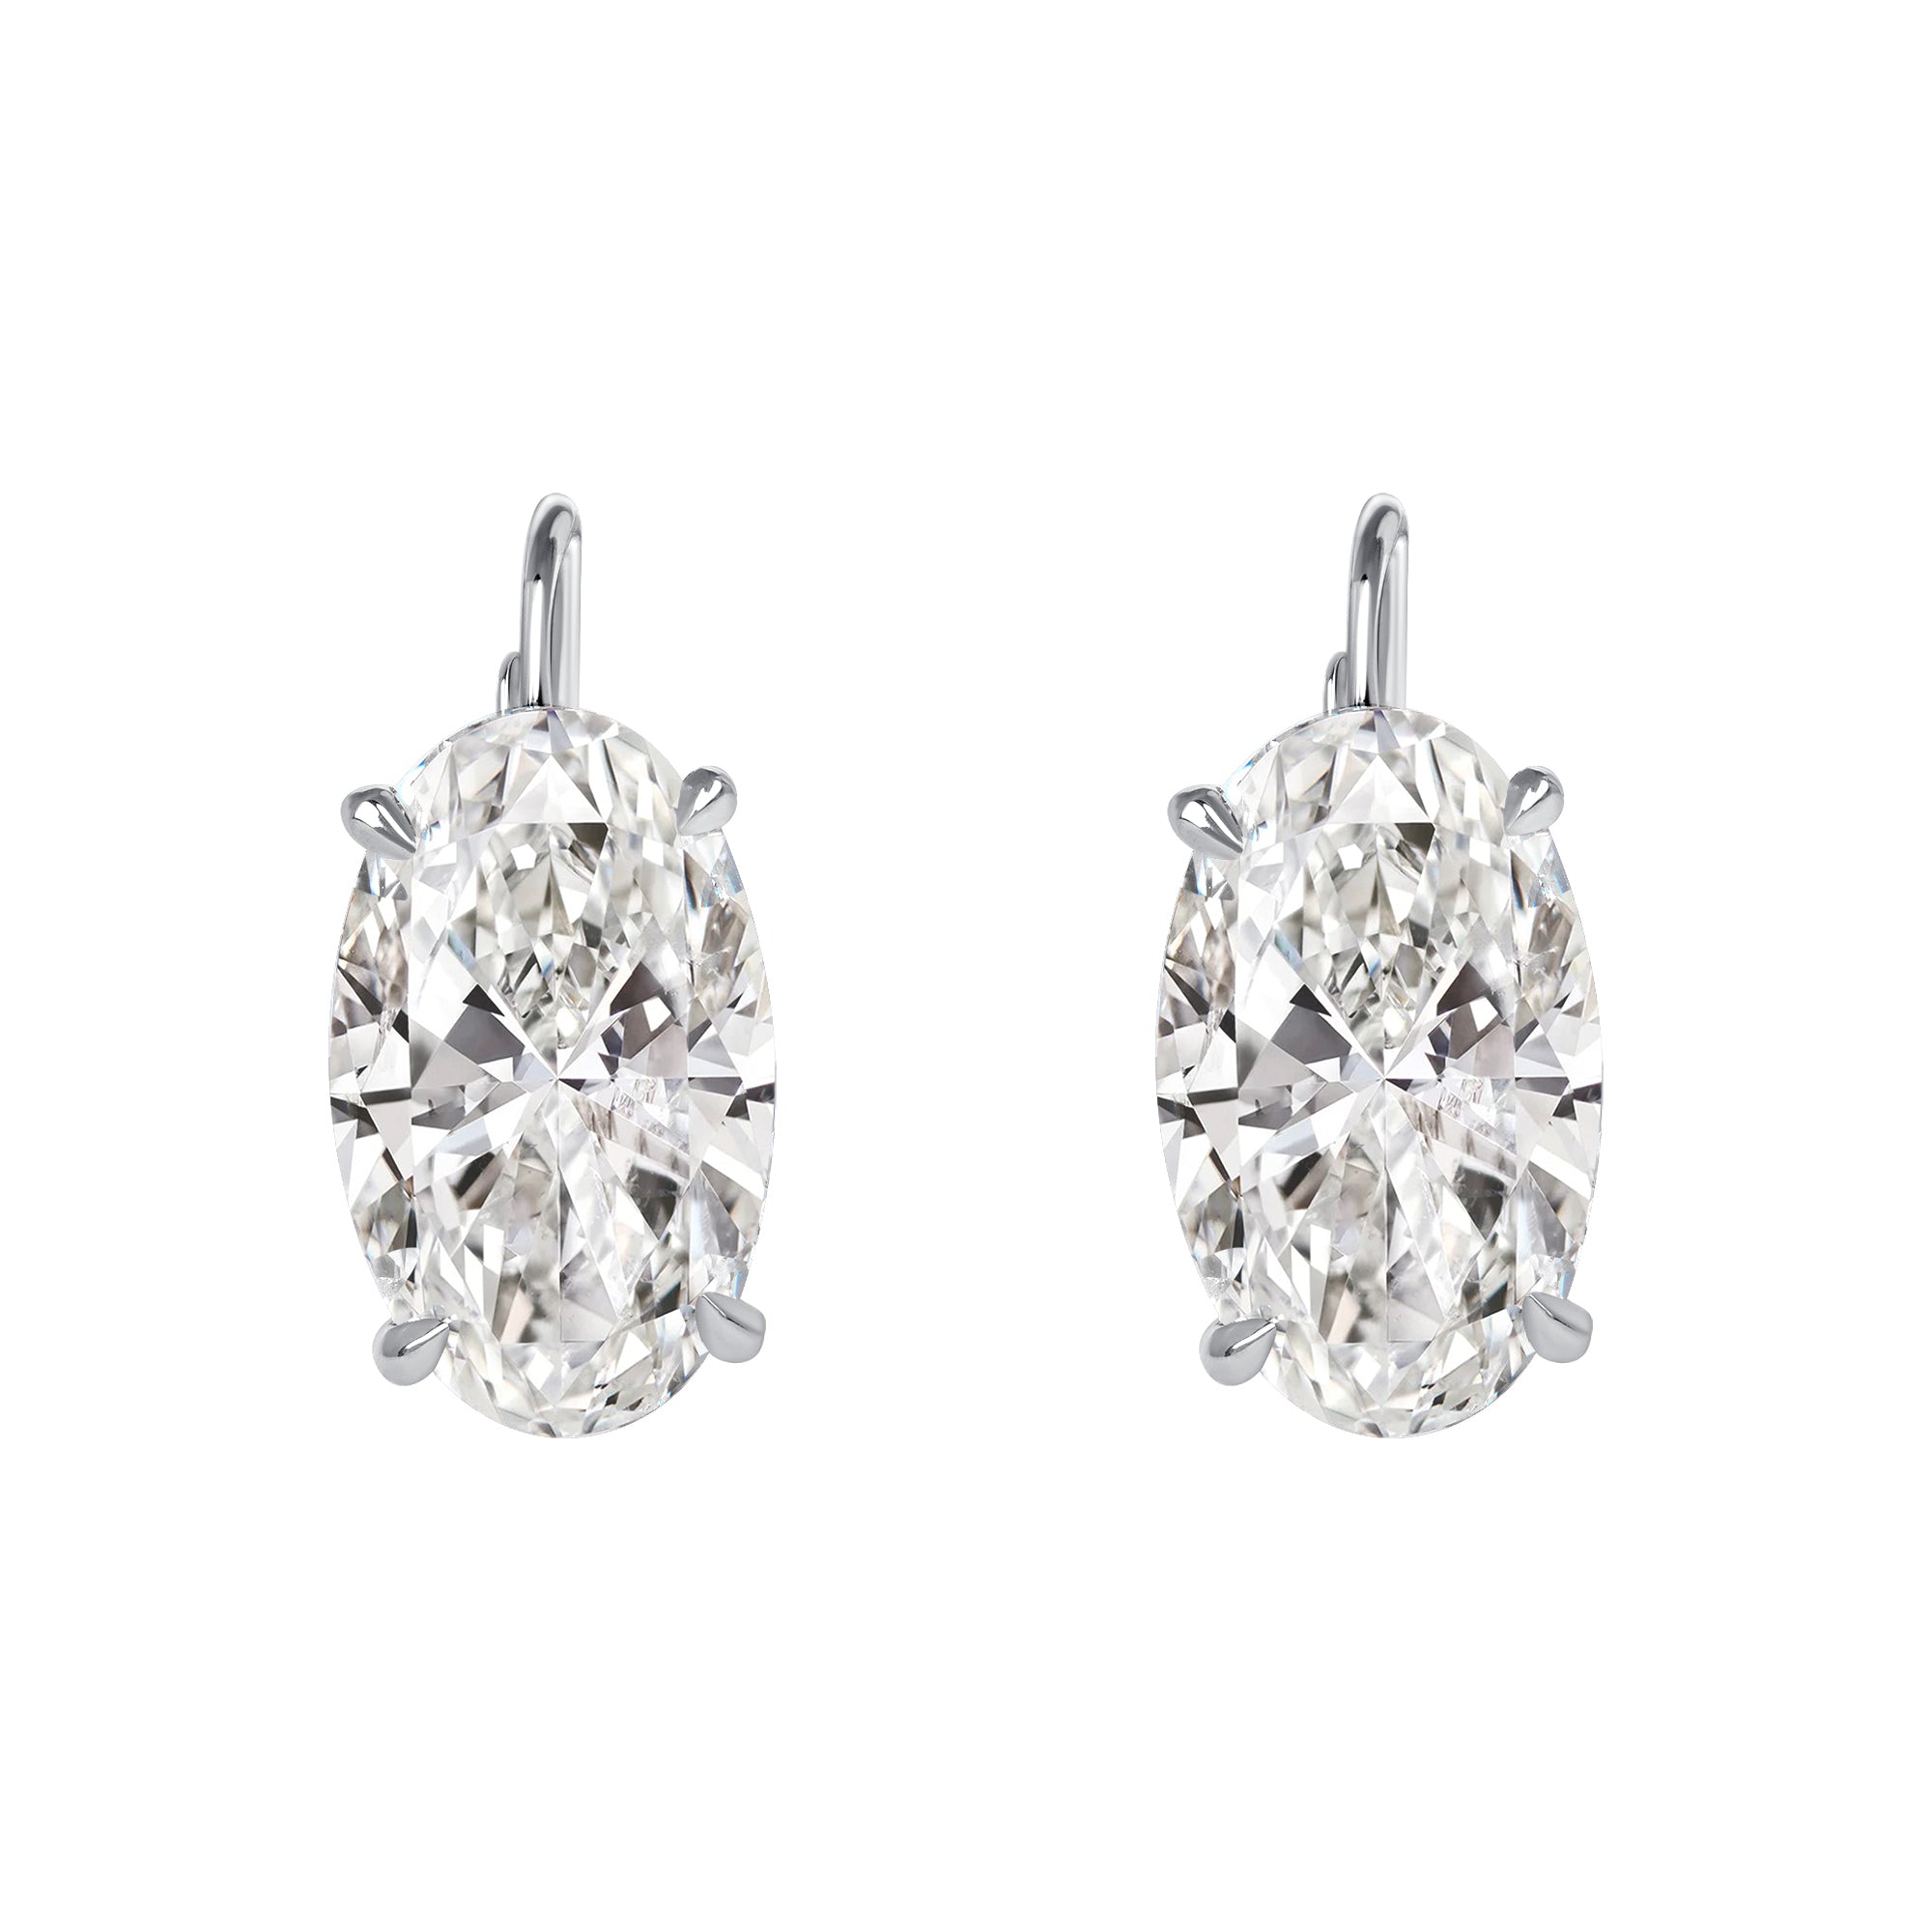 Oval Shaped Diamond Leverback Earrings in 18K White Gold, GIA Certified